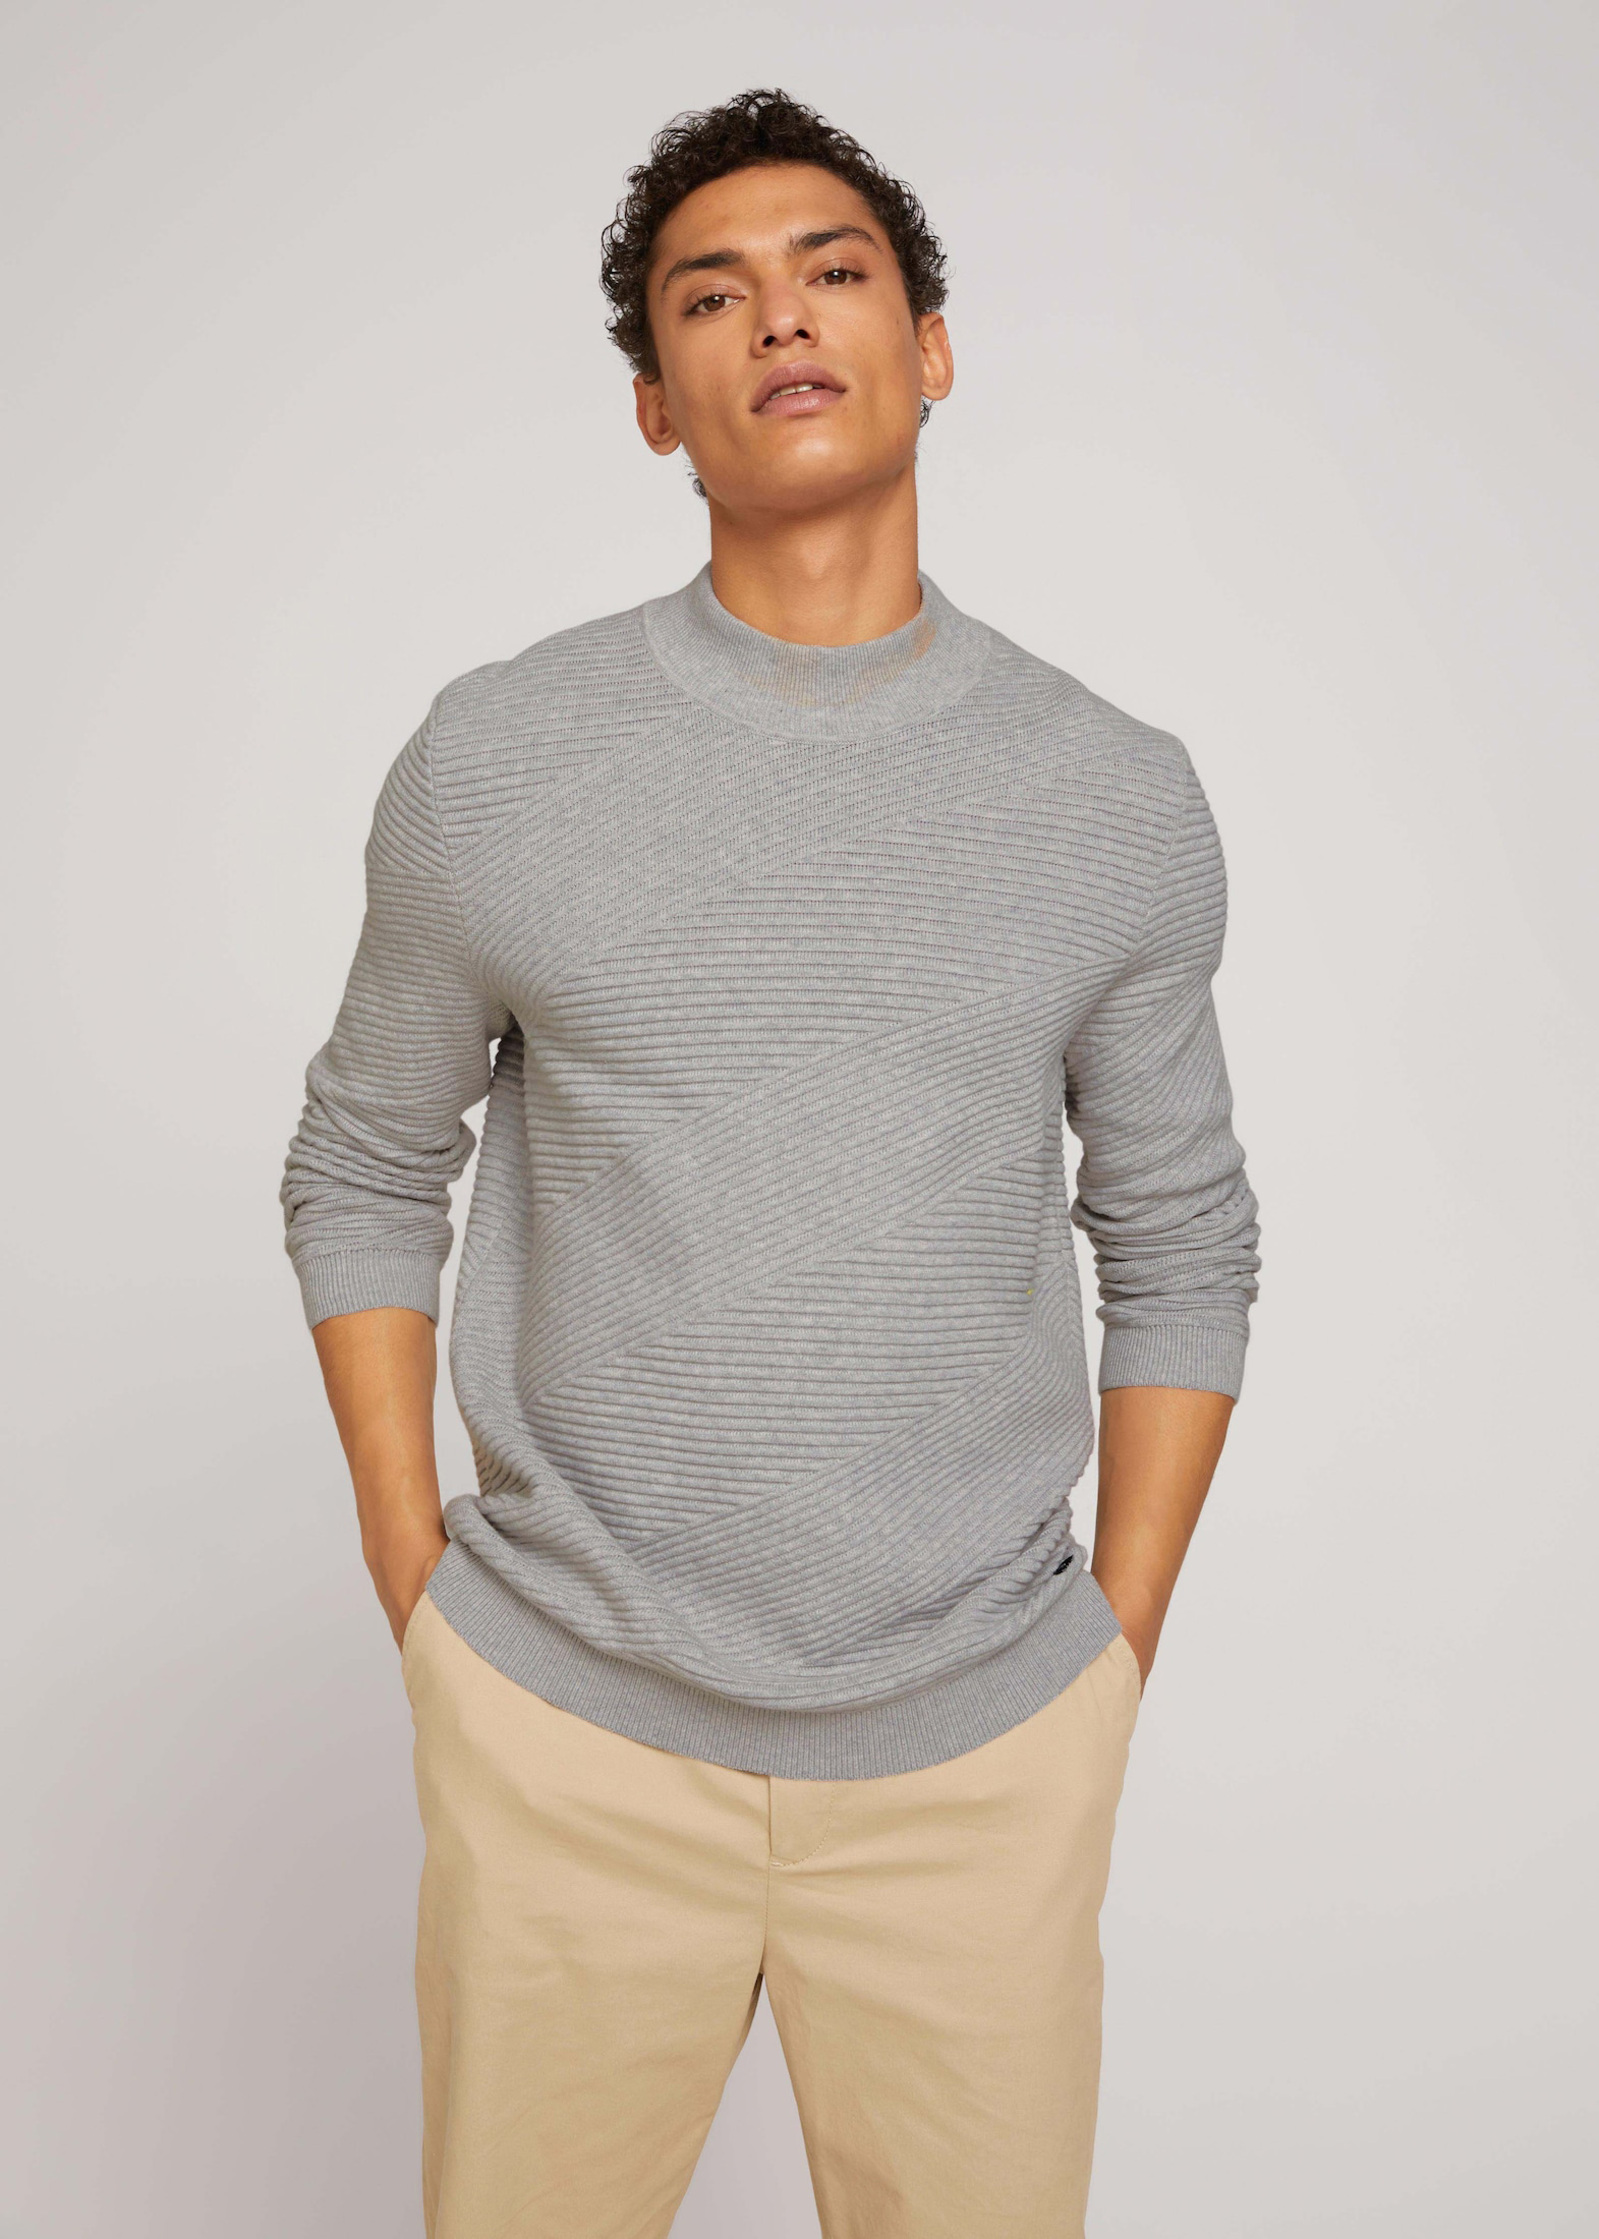 Tom Tailor® Geometric Structured Sweater - Light Stone Grey Melange Size XL